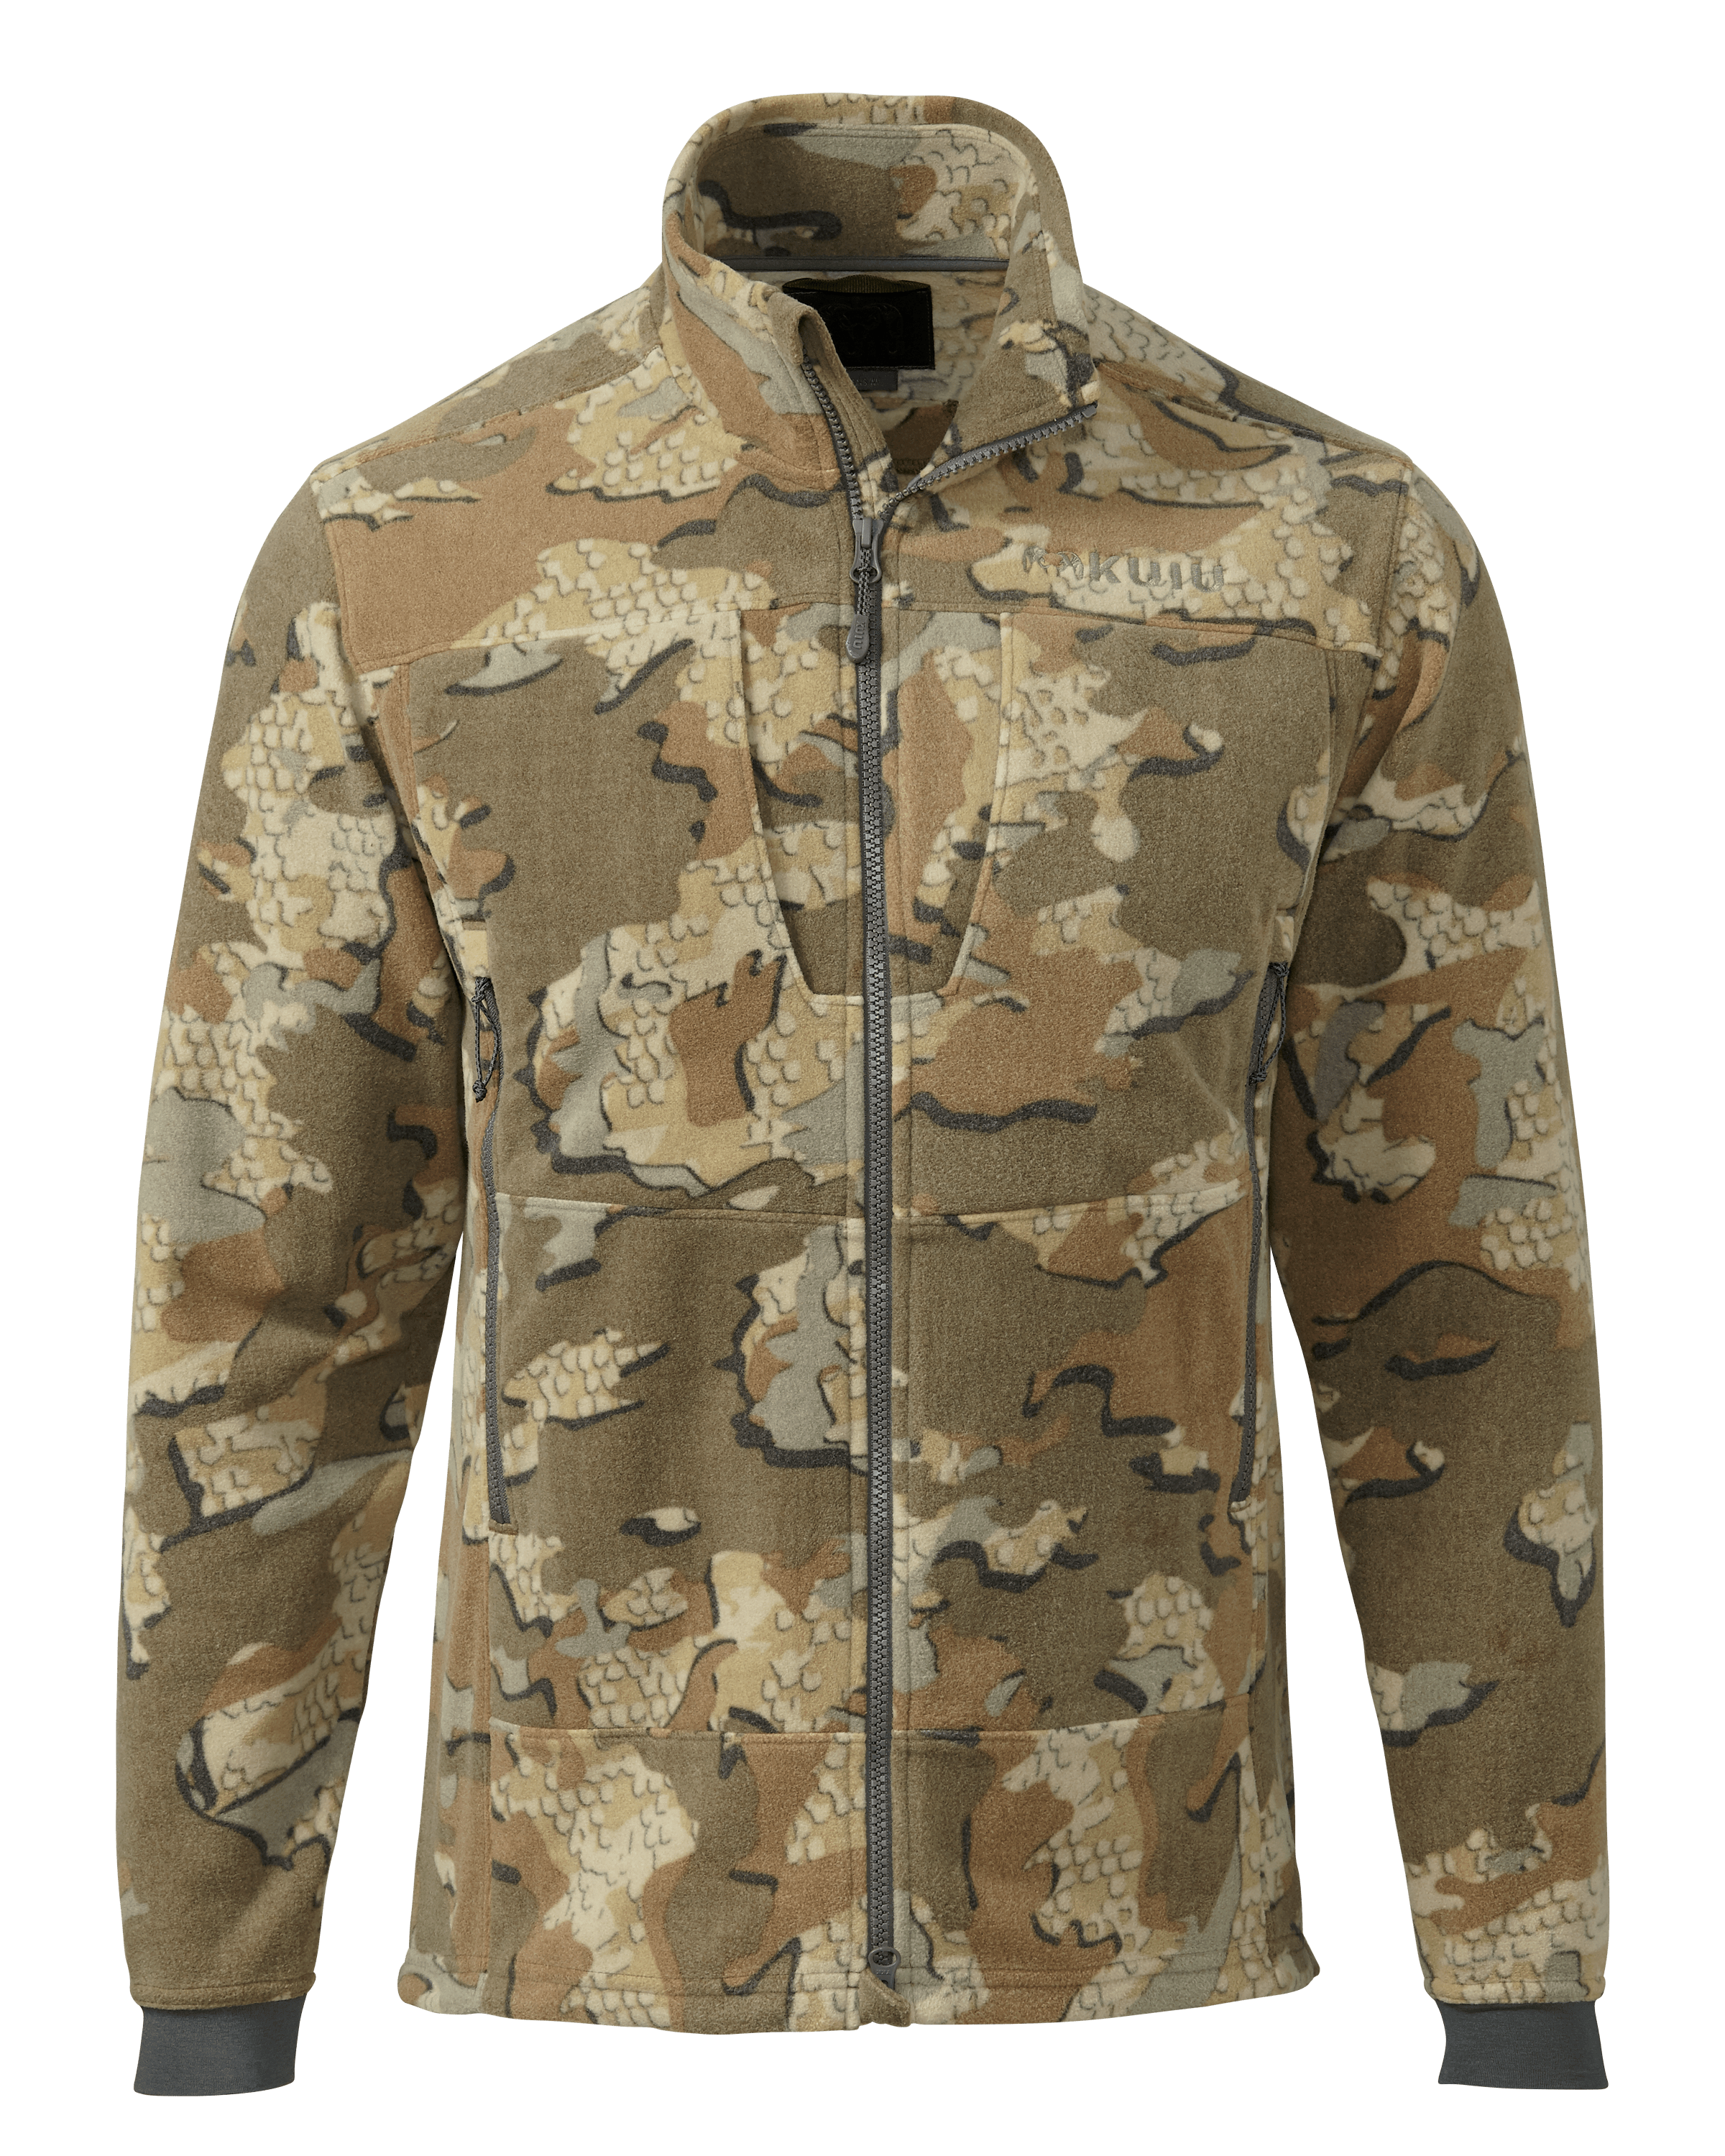 KUIU Wind Pro Fleece Full Zip Hunting Jacket in Valo | Size Medium